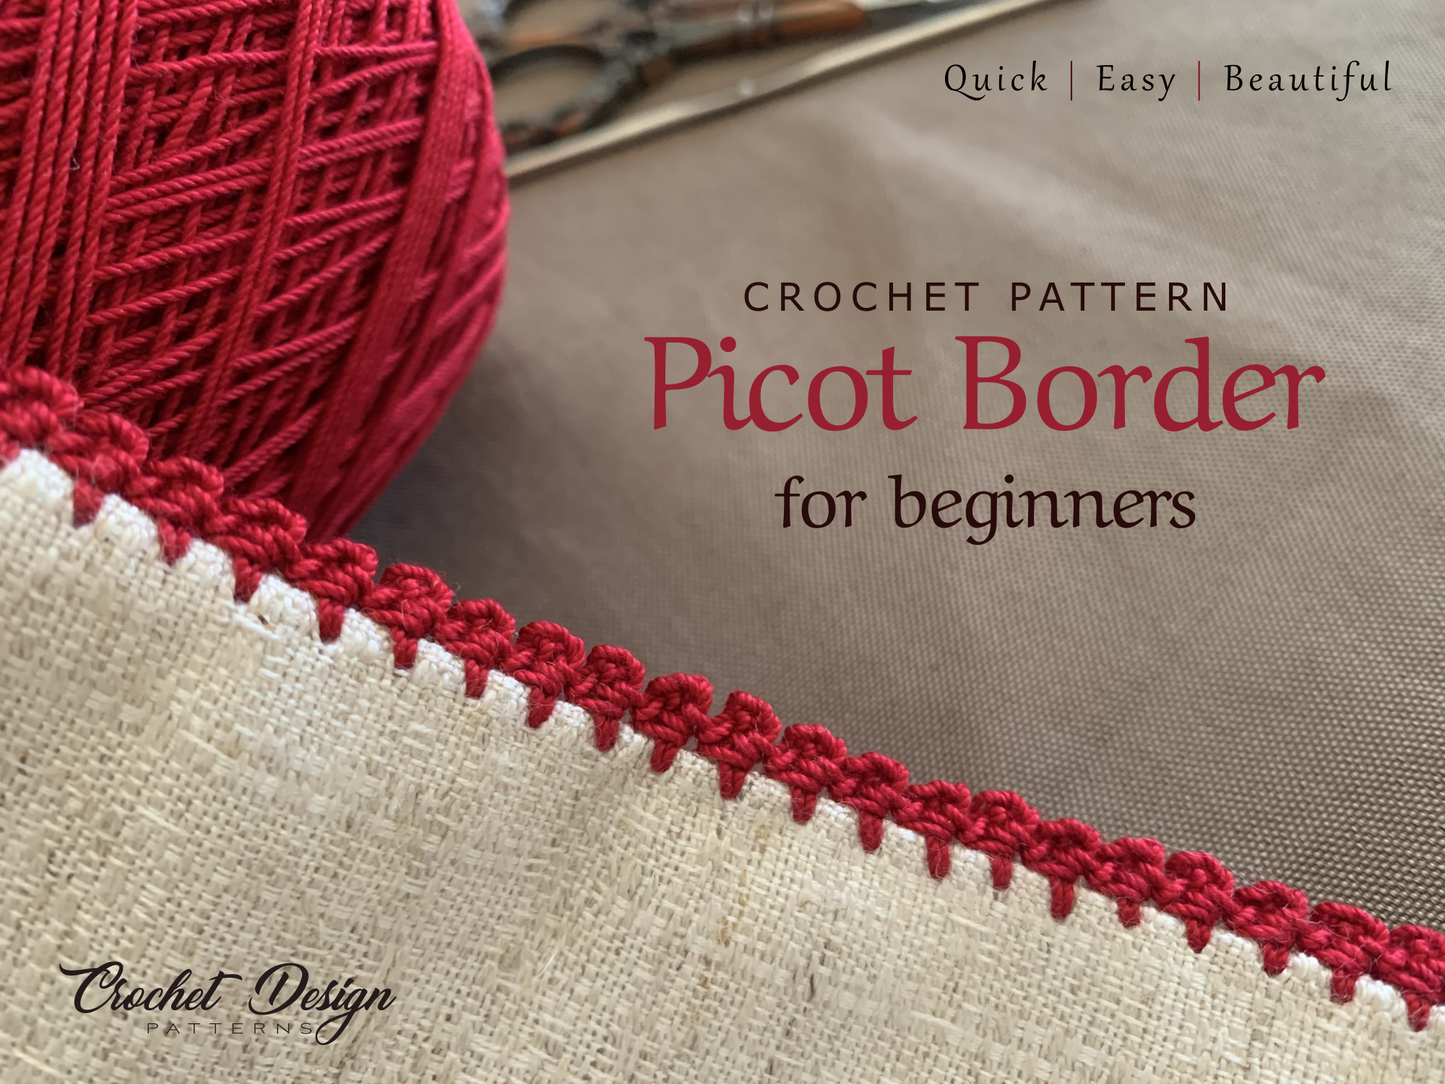 Picot mini border | Crochet pattern